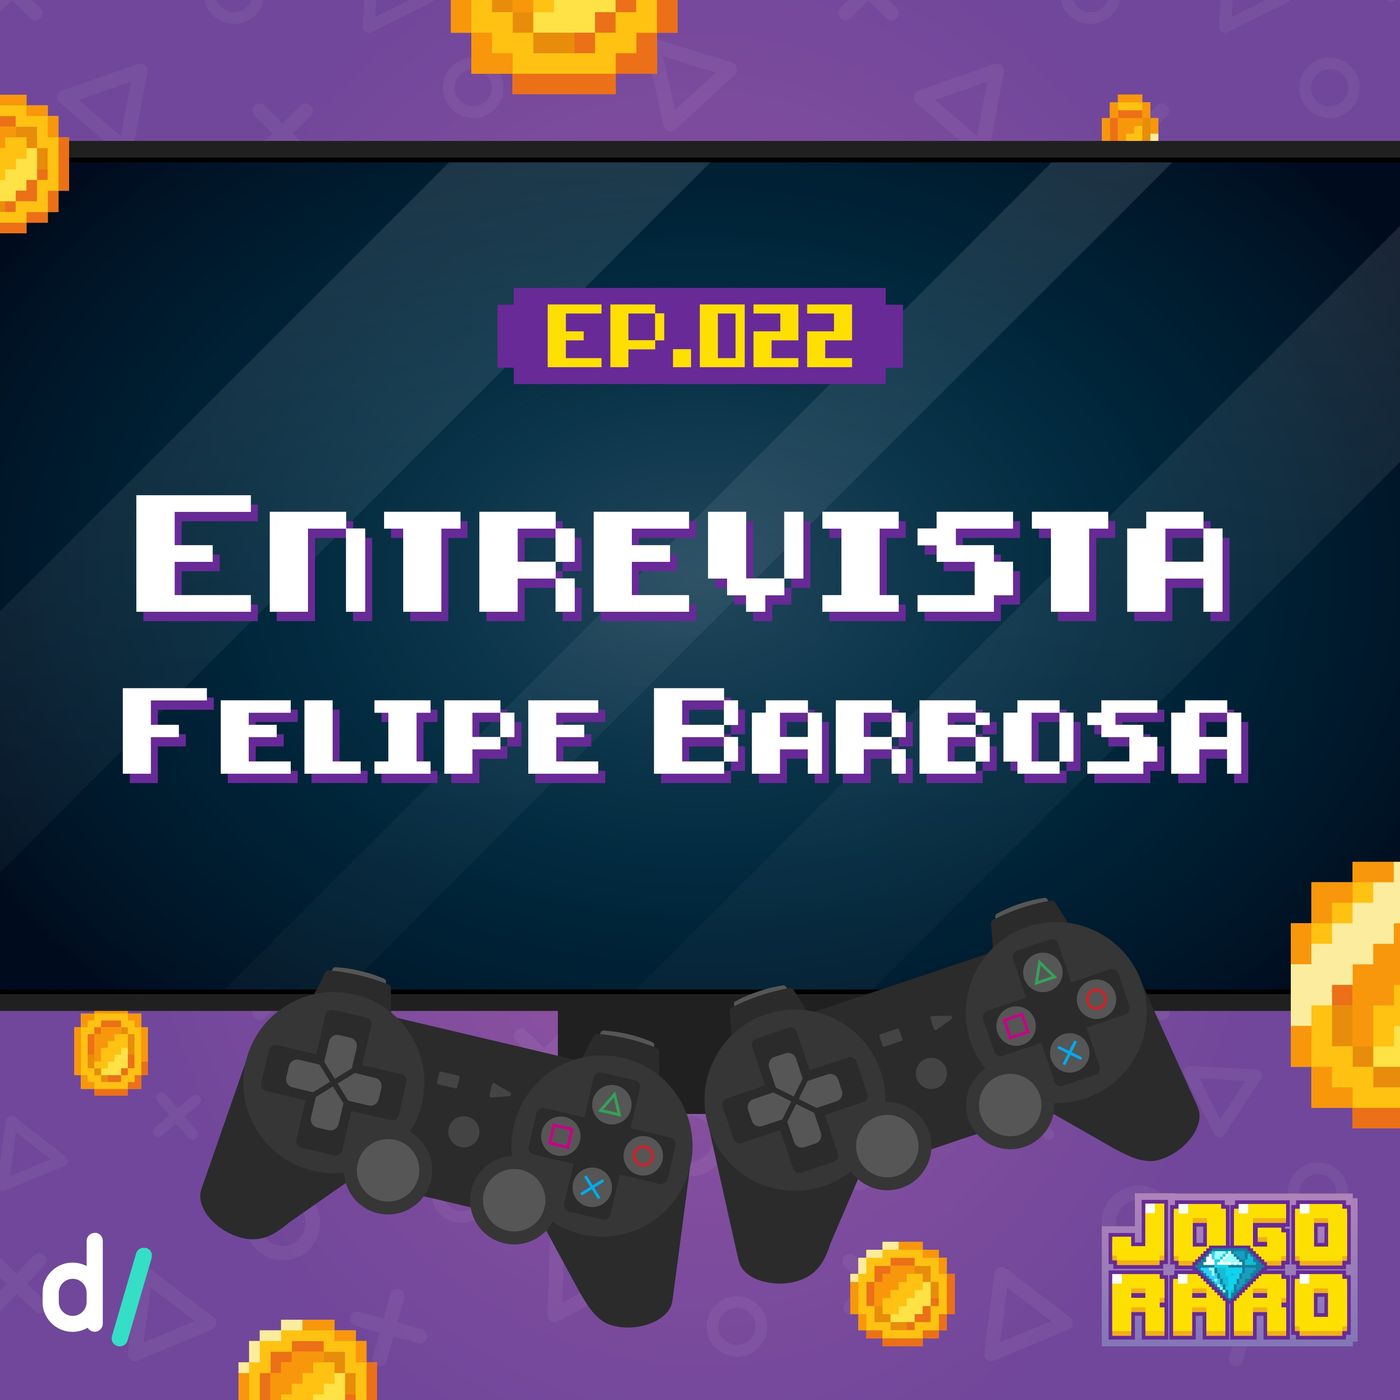 Ep. 22 - Entrevista: Felipe Barbosa | Video game com cerveja